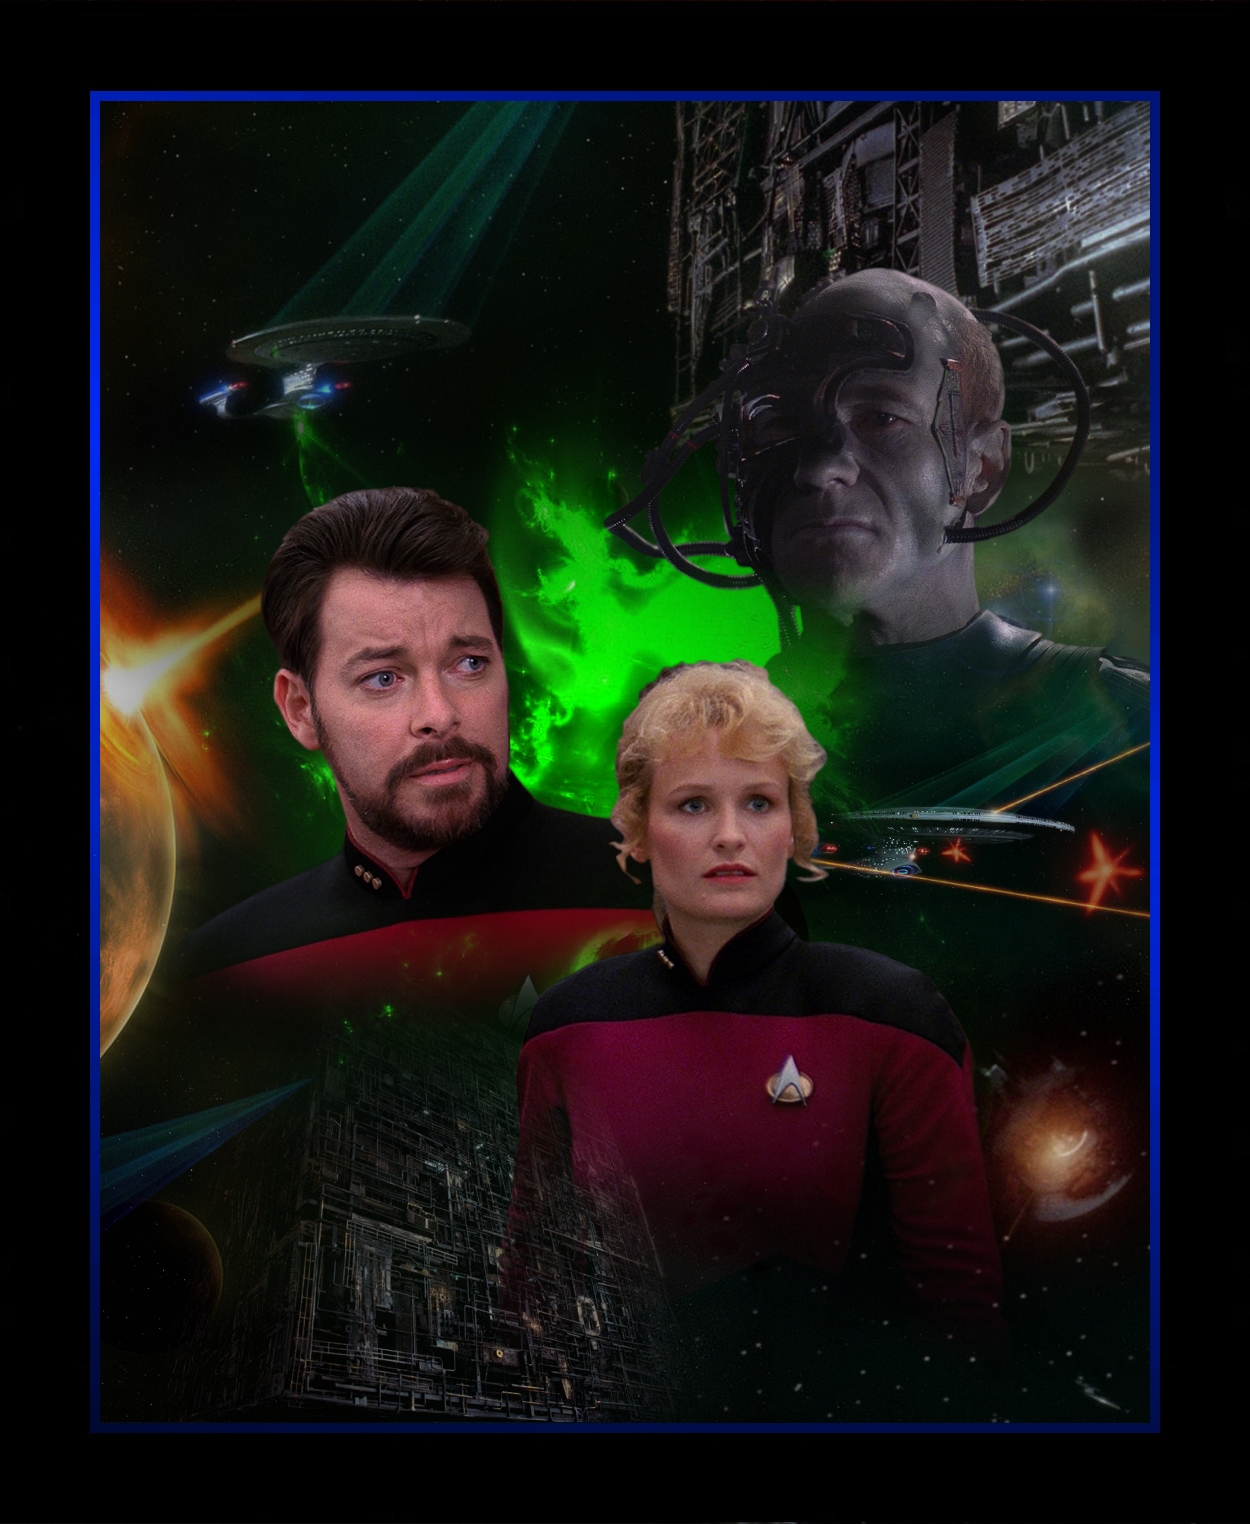 Star Trek Tng The Best Of Both Worlds By Lordradim On Deviantart